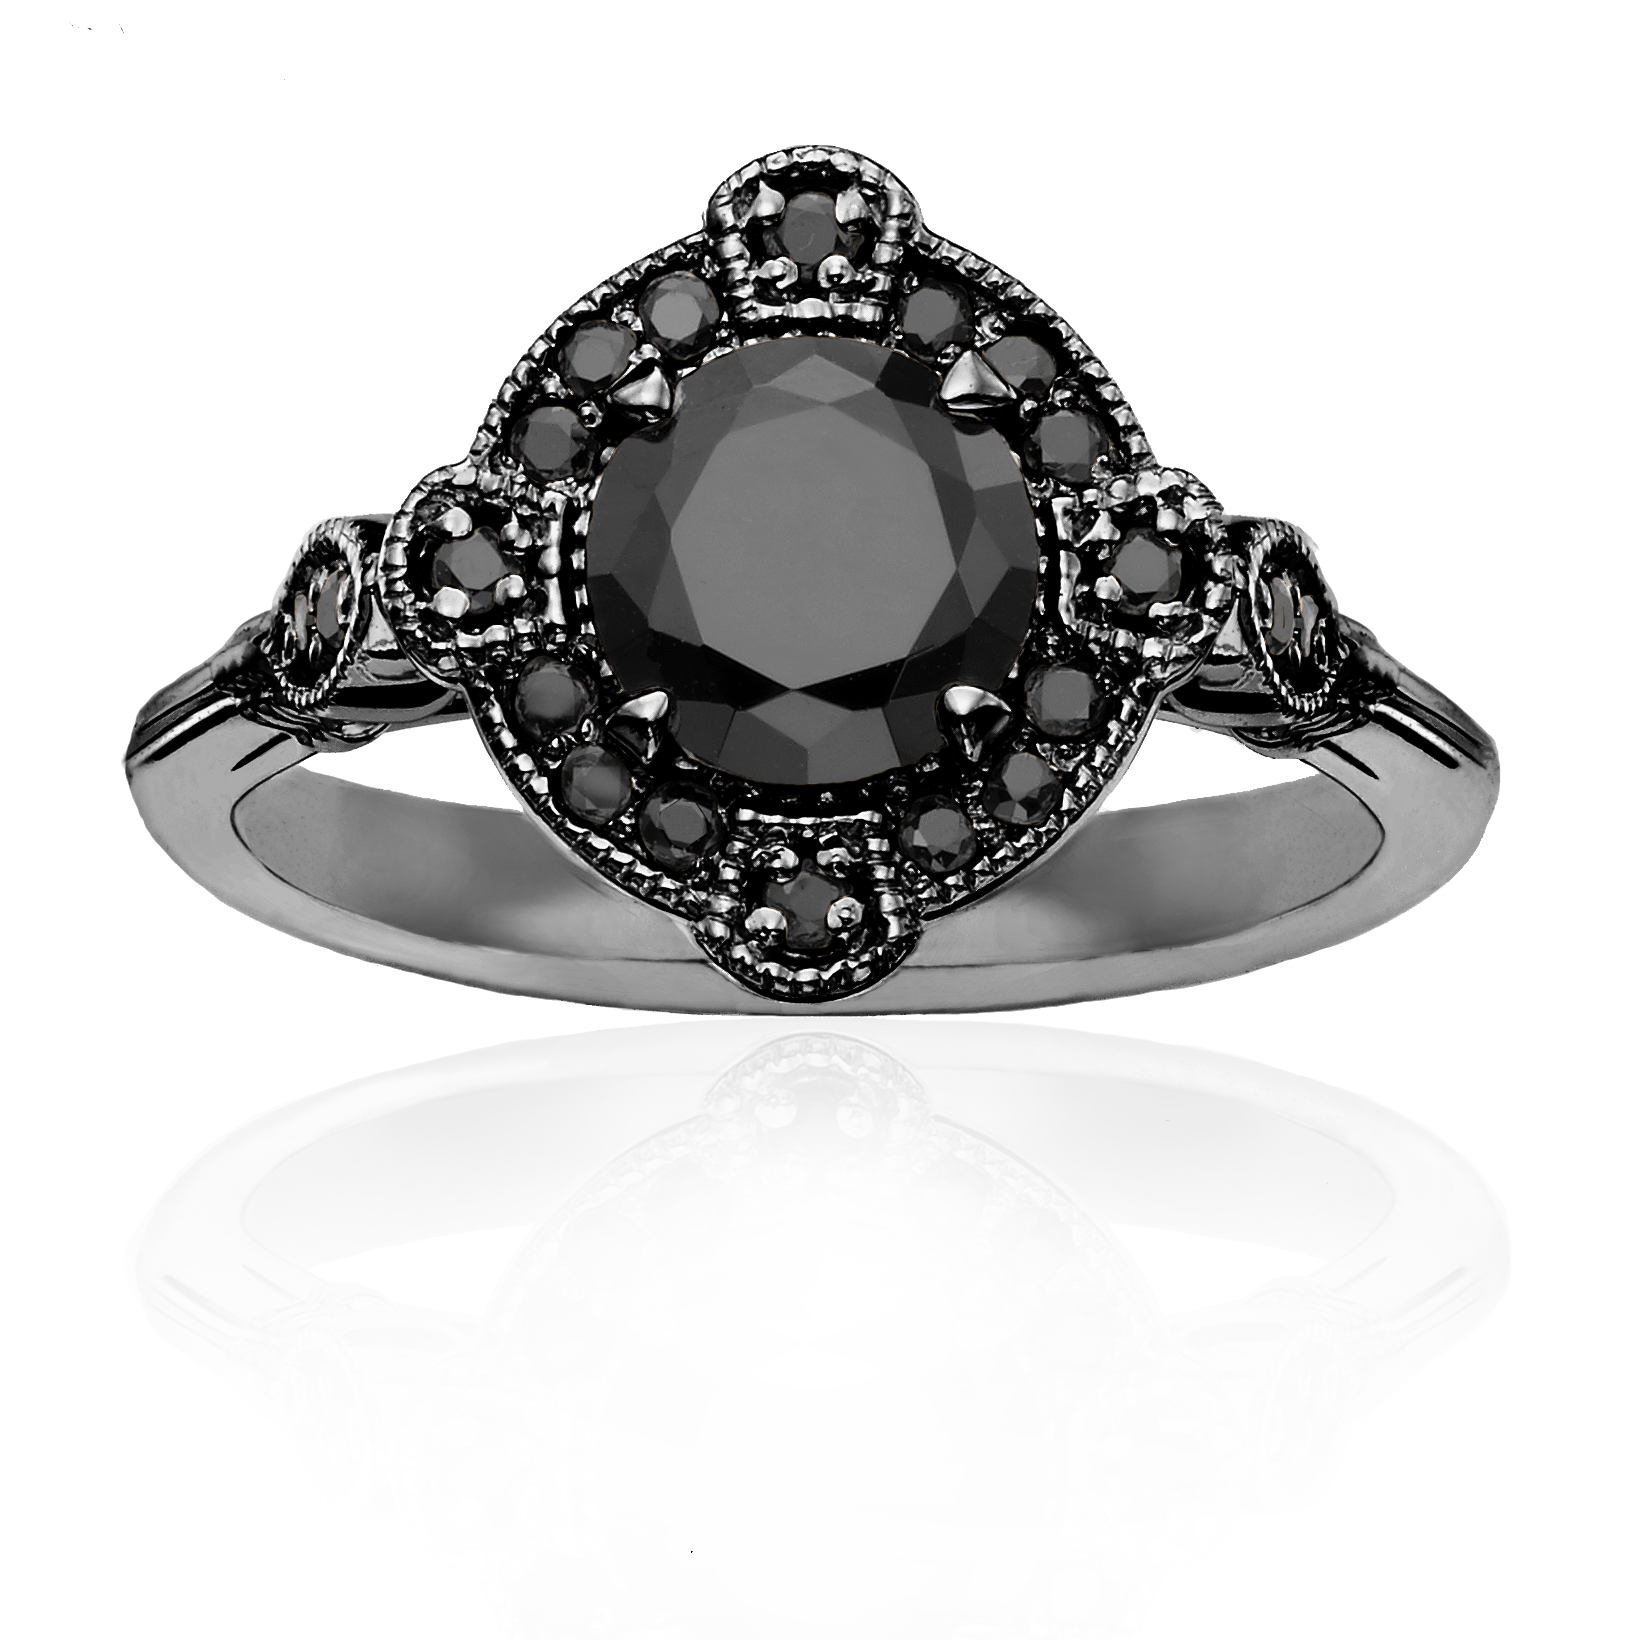 Diamond Logo png download - 790*791 - Free Transparent Wedding Ring png  Download. - CleanPNG / KissPNG